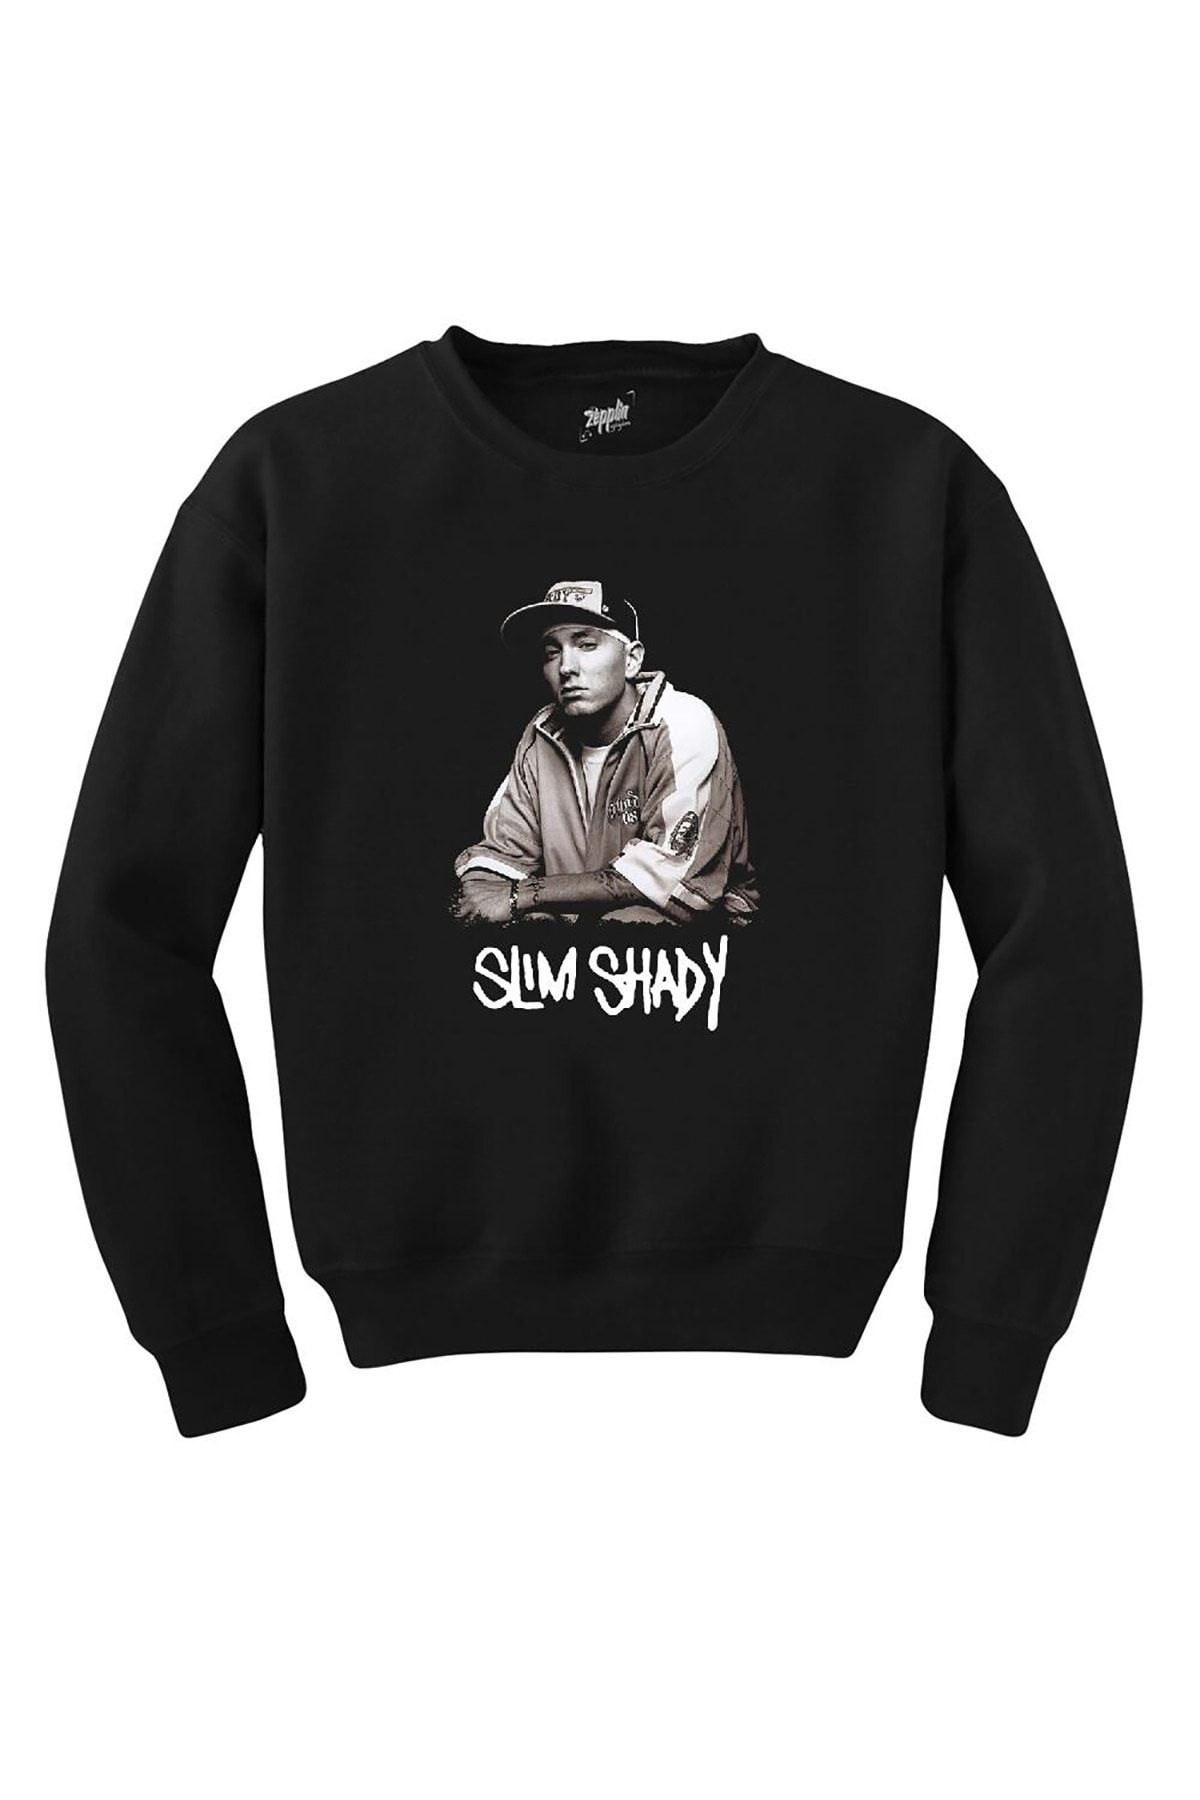 Z zepplin Eminem Slim Shady 08 Siyah Sweatshirt